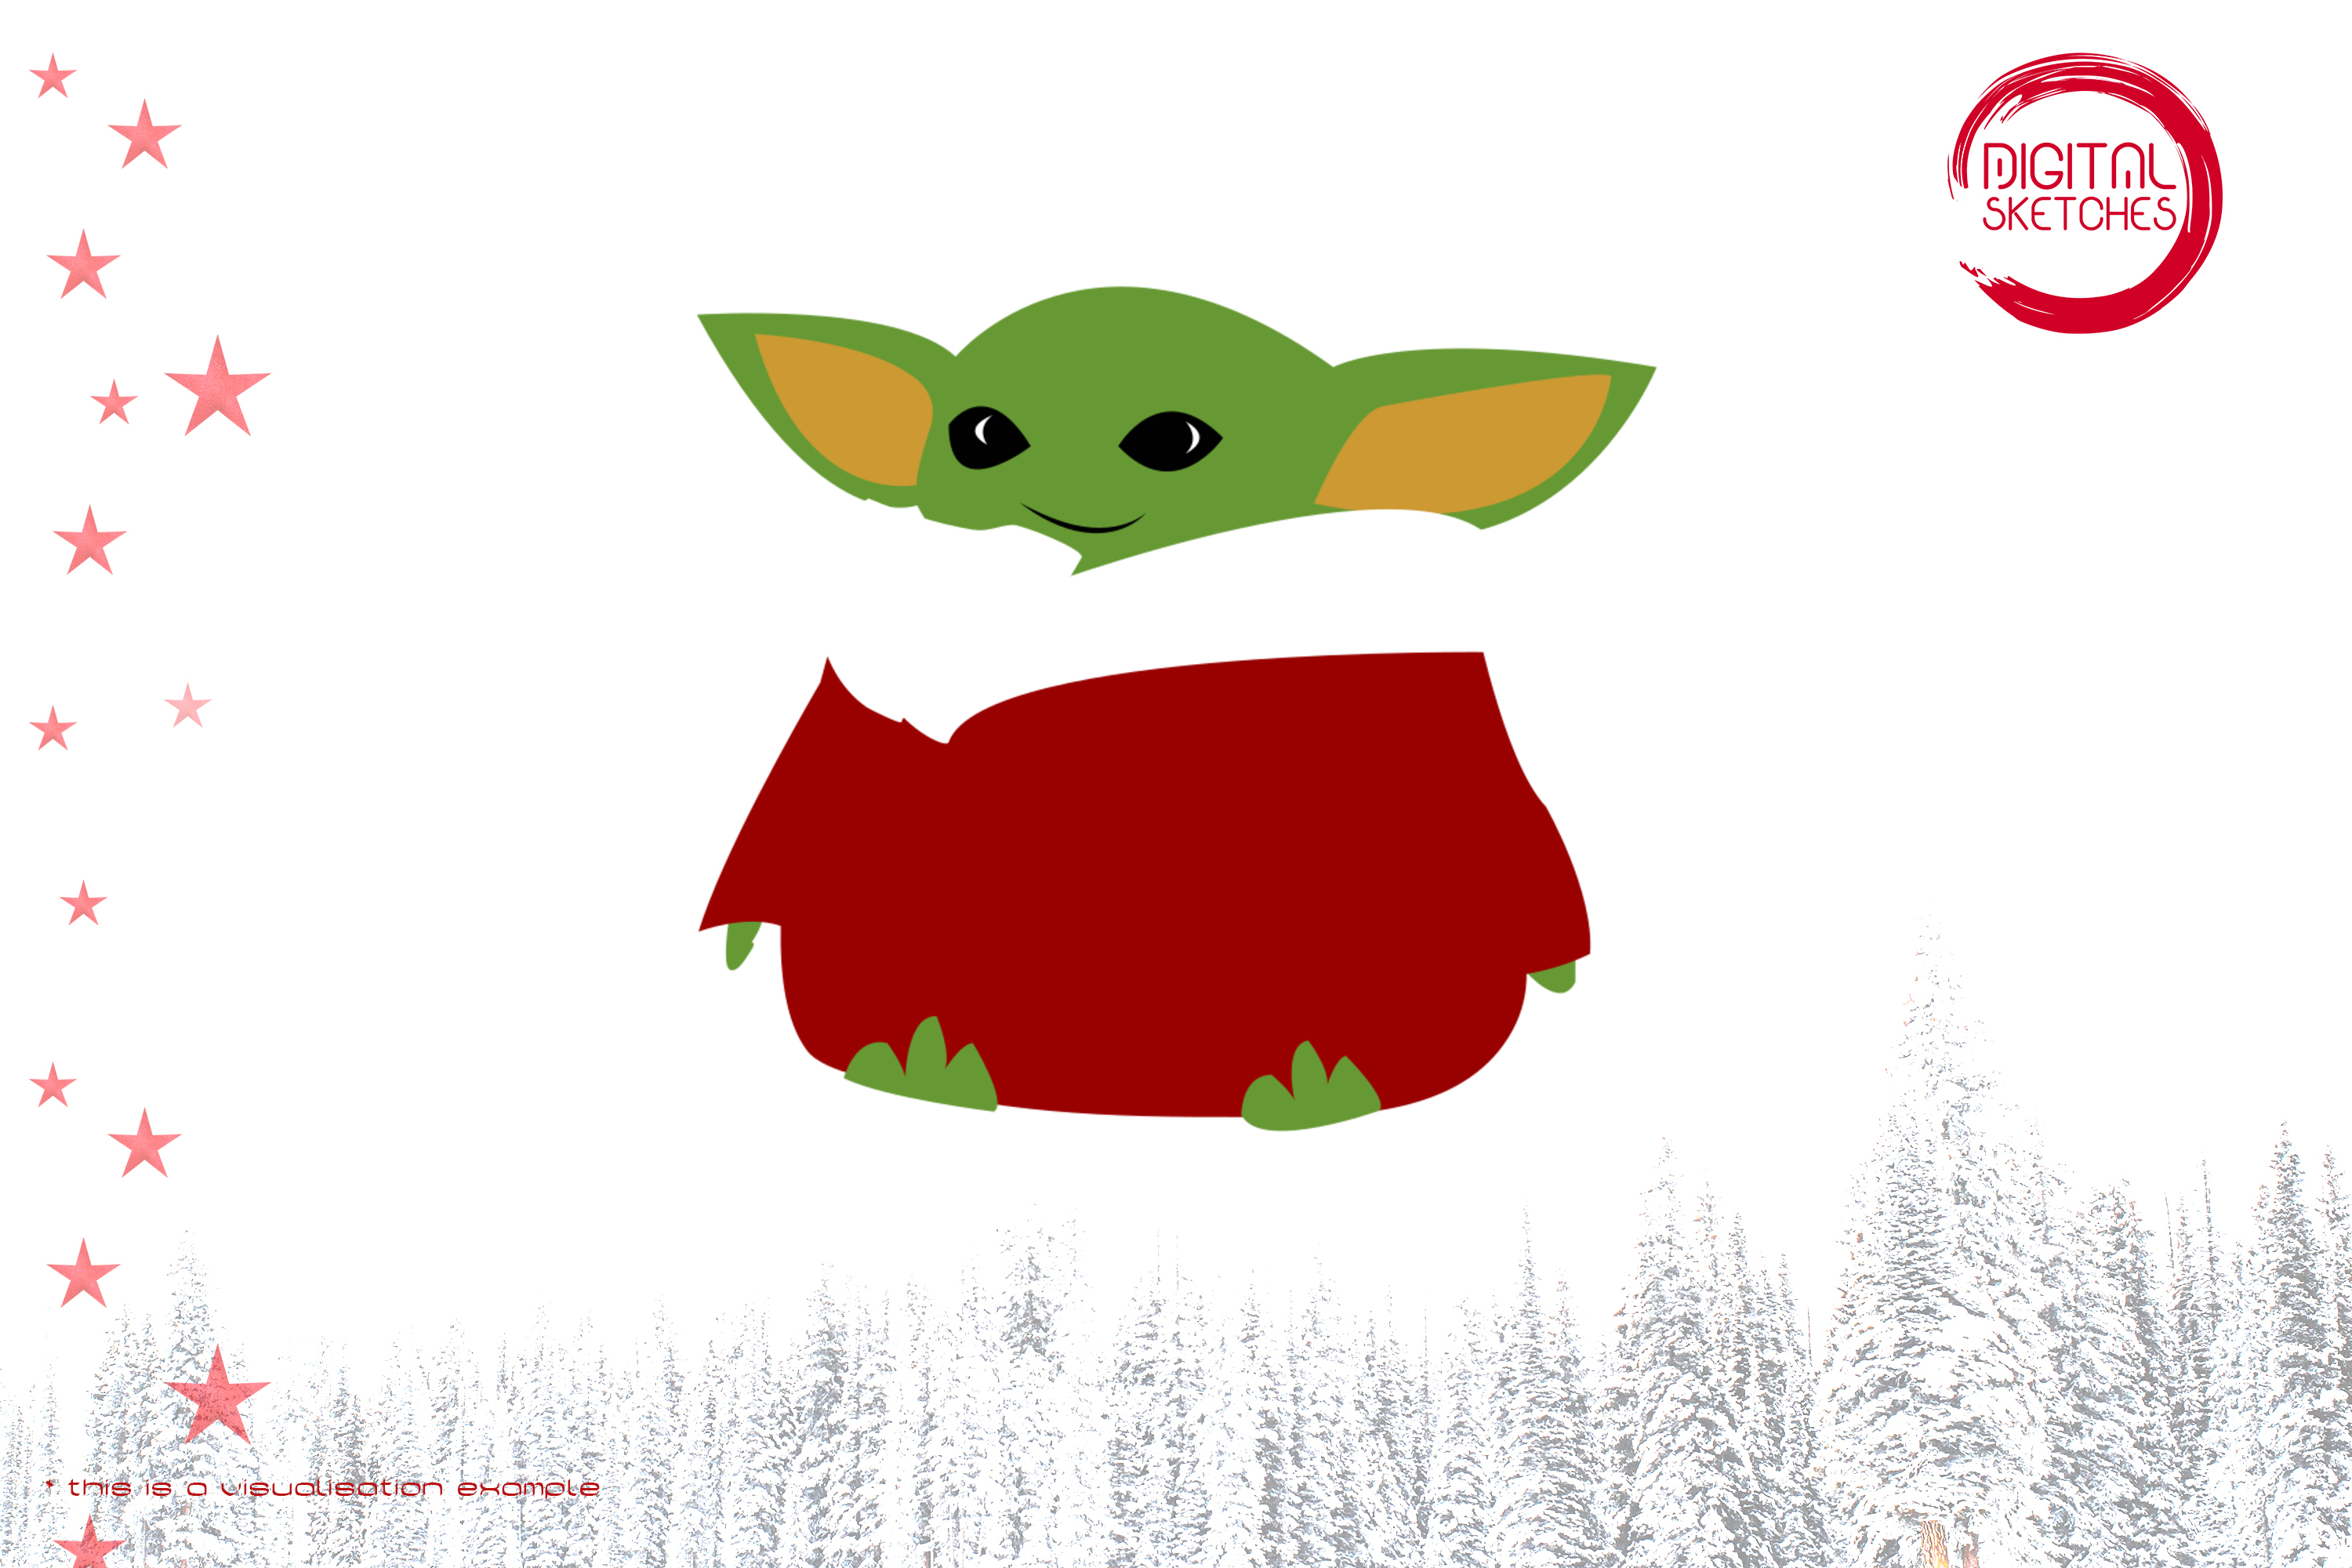 Tribute To Fictional Character Grogu aka Baby Yoda (Santa Claus)